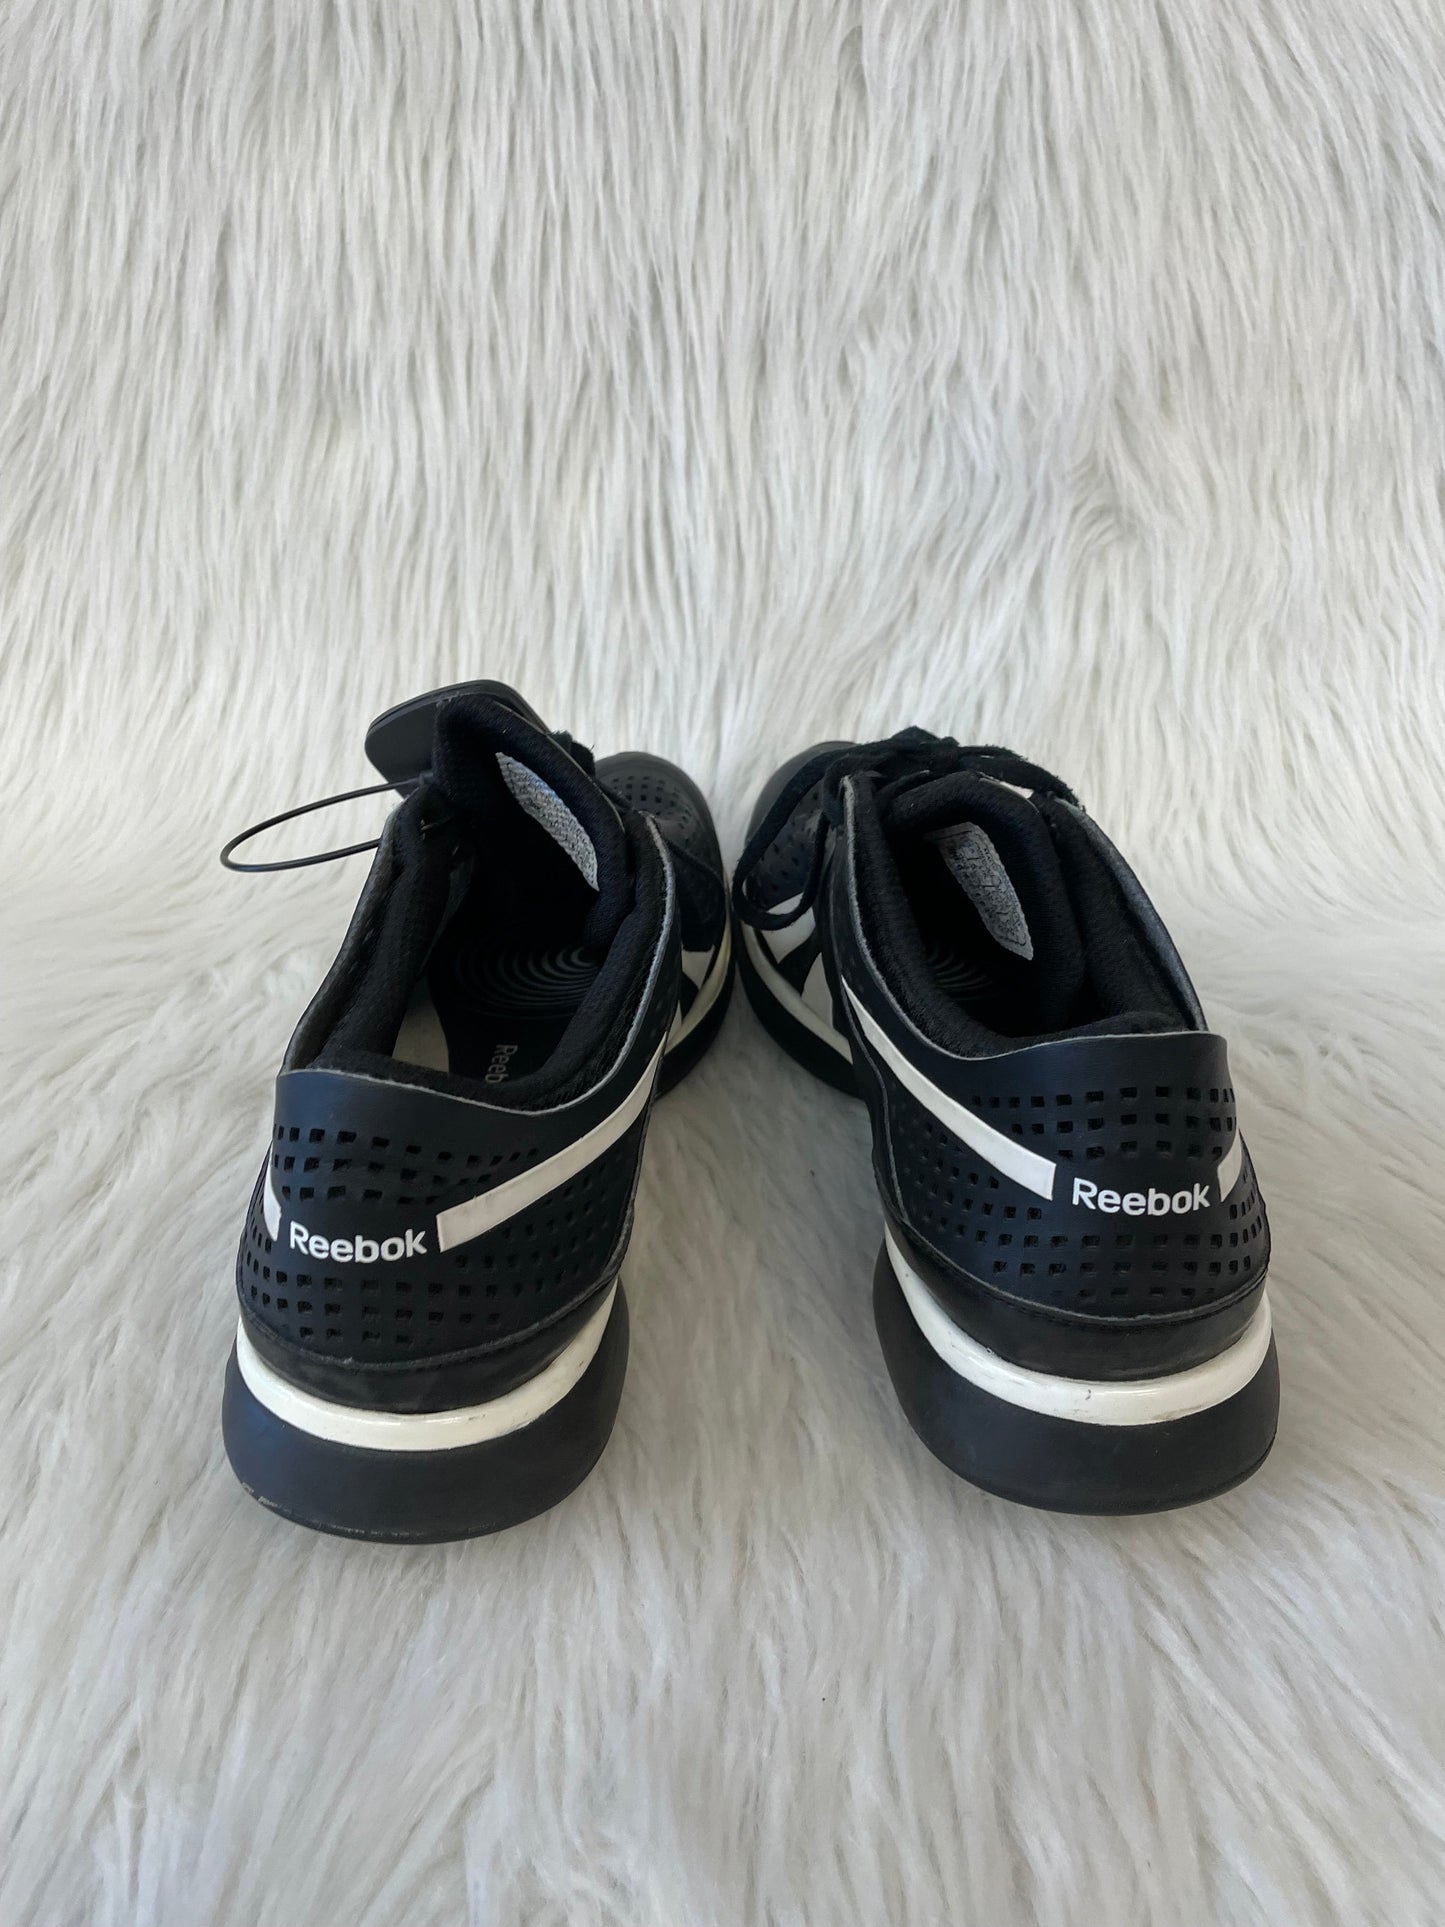 Black & White Shoes Athletic Reebok, Size 8